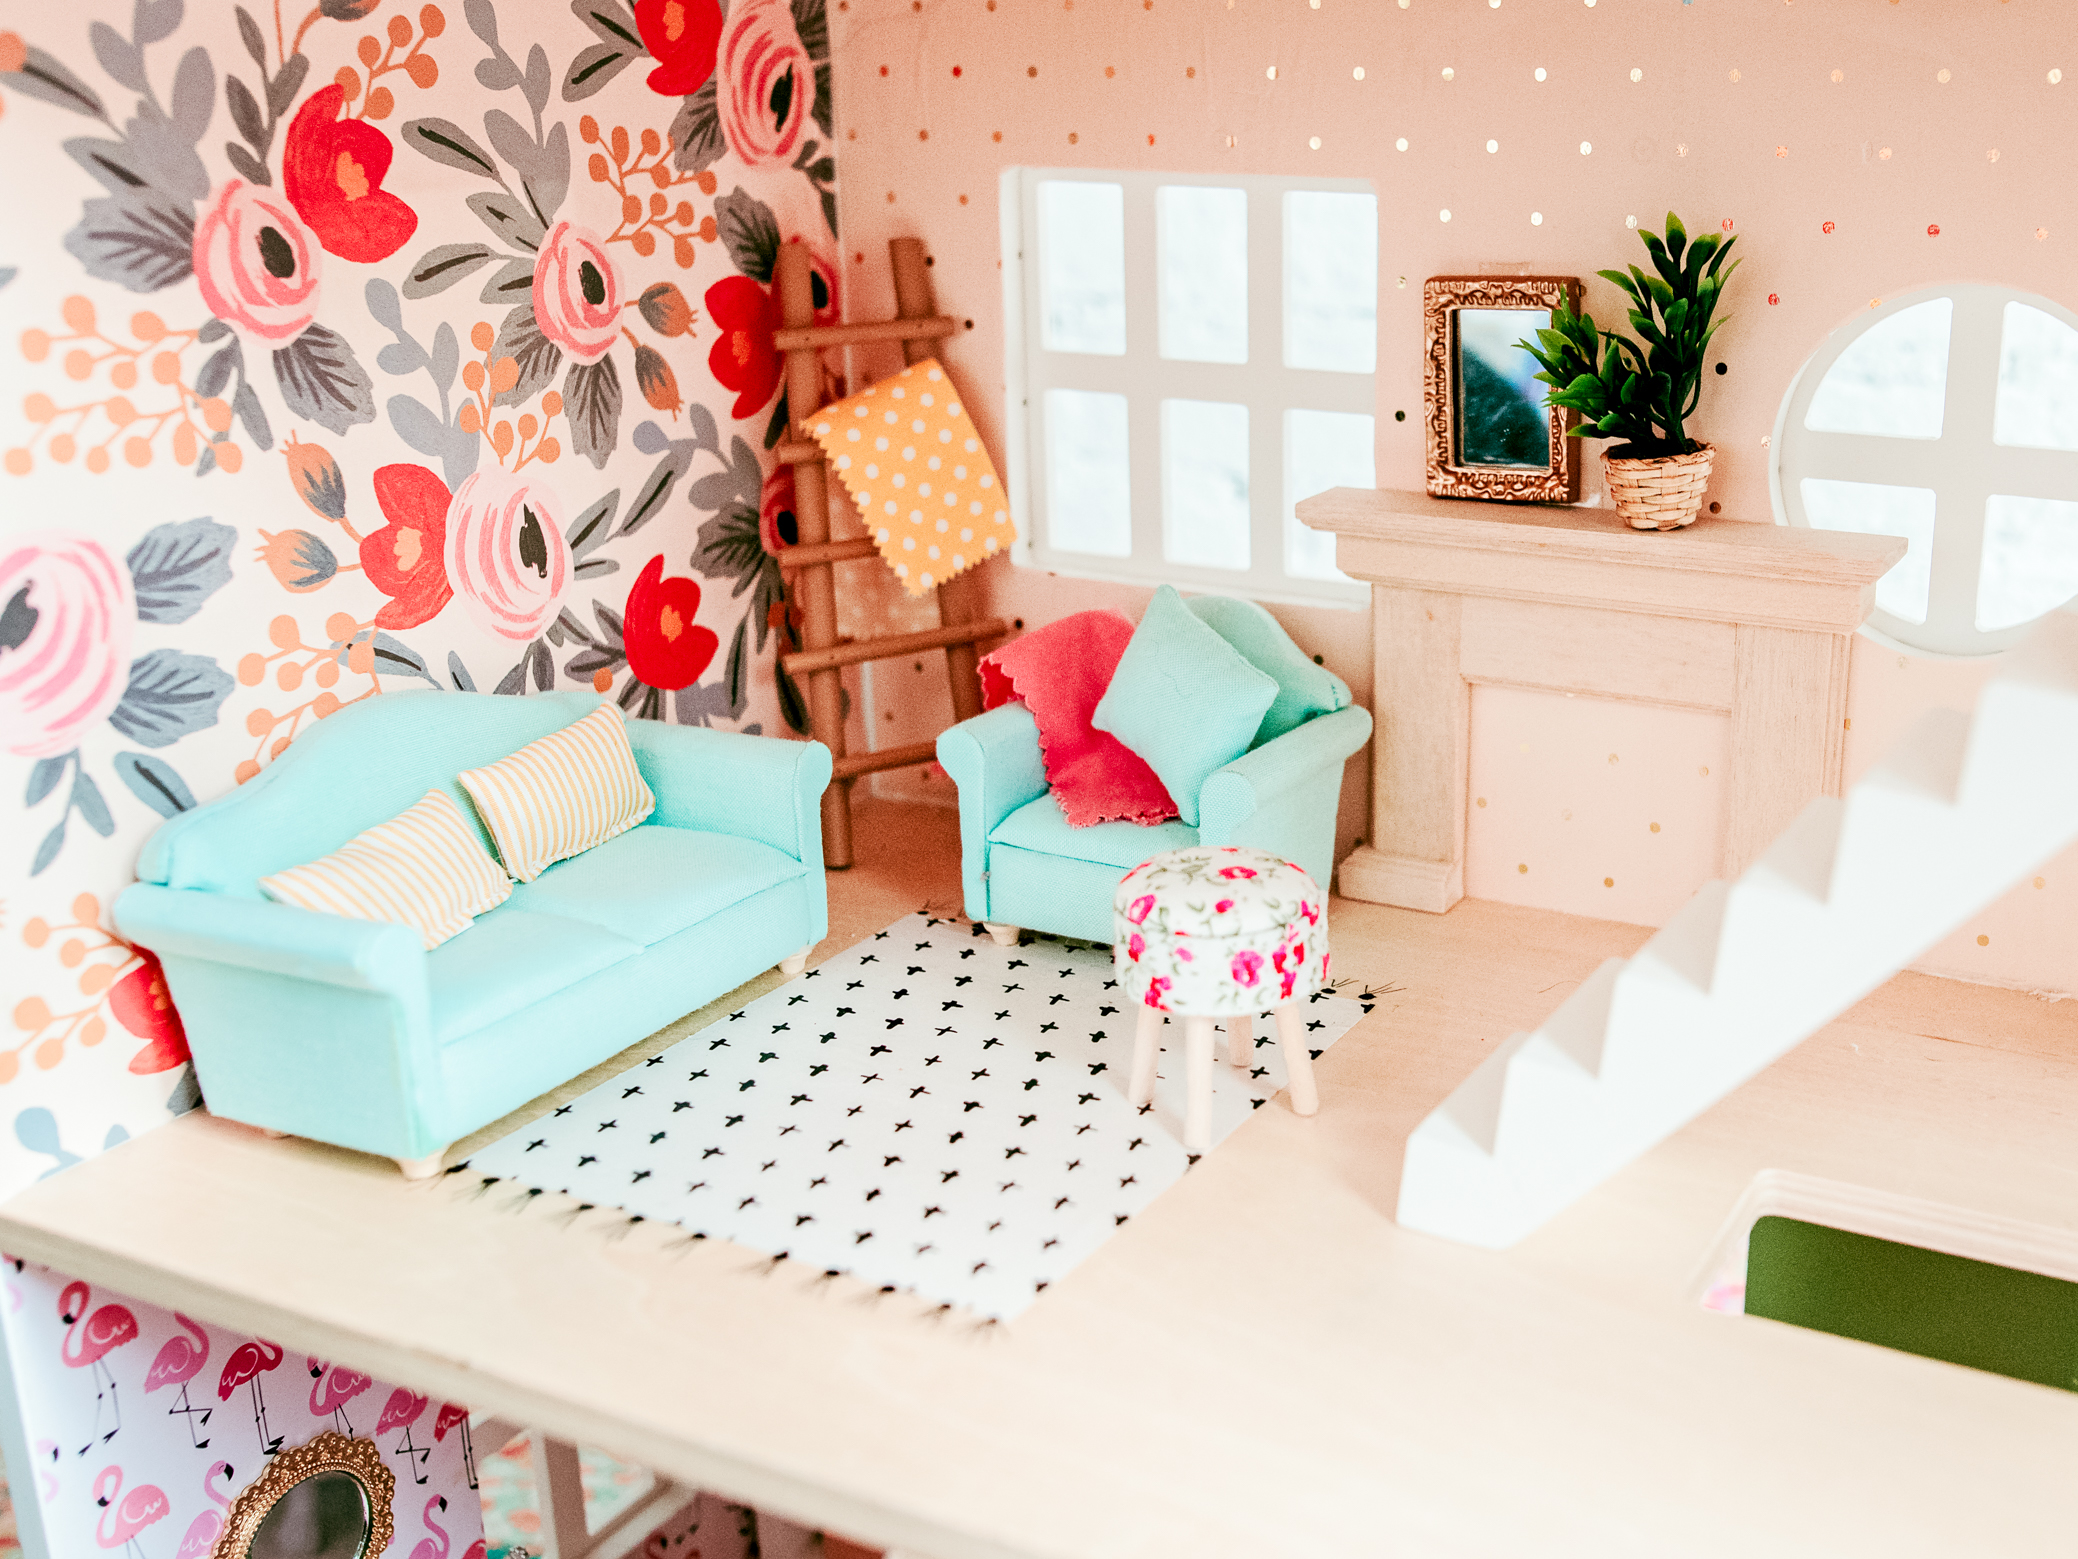 Miniature dollhouse living room inspiration. Dollhouse decor in the Hearth and Hand dollhouse